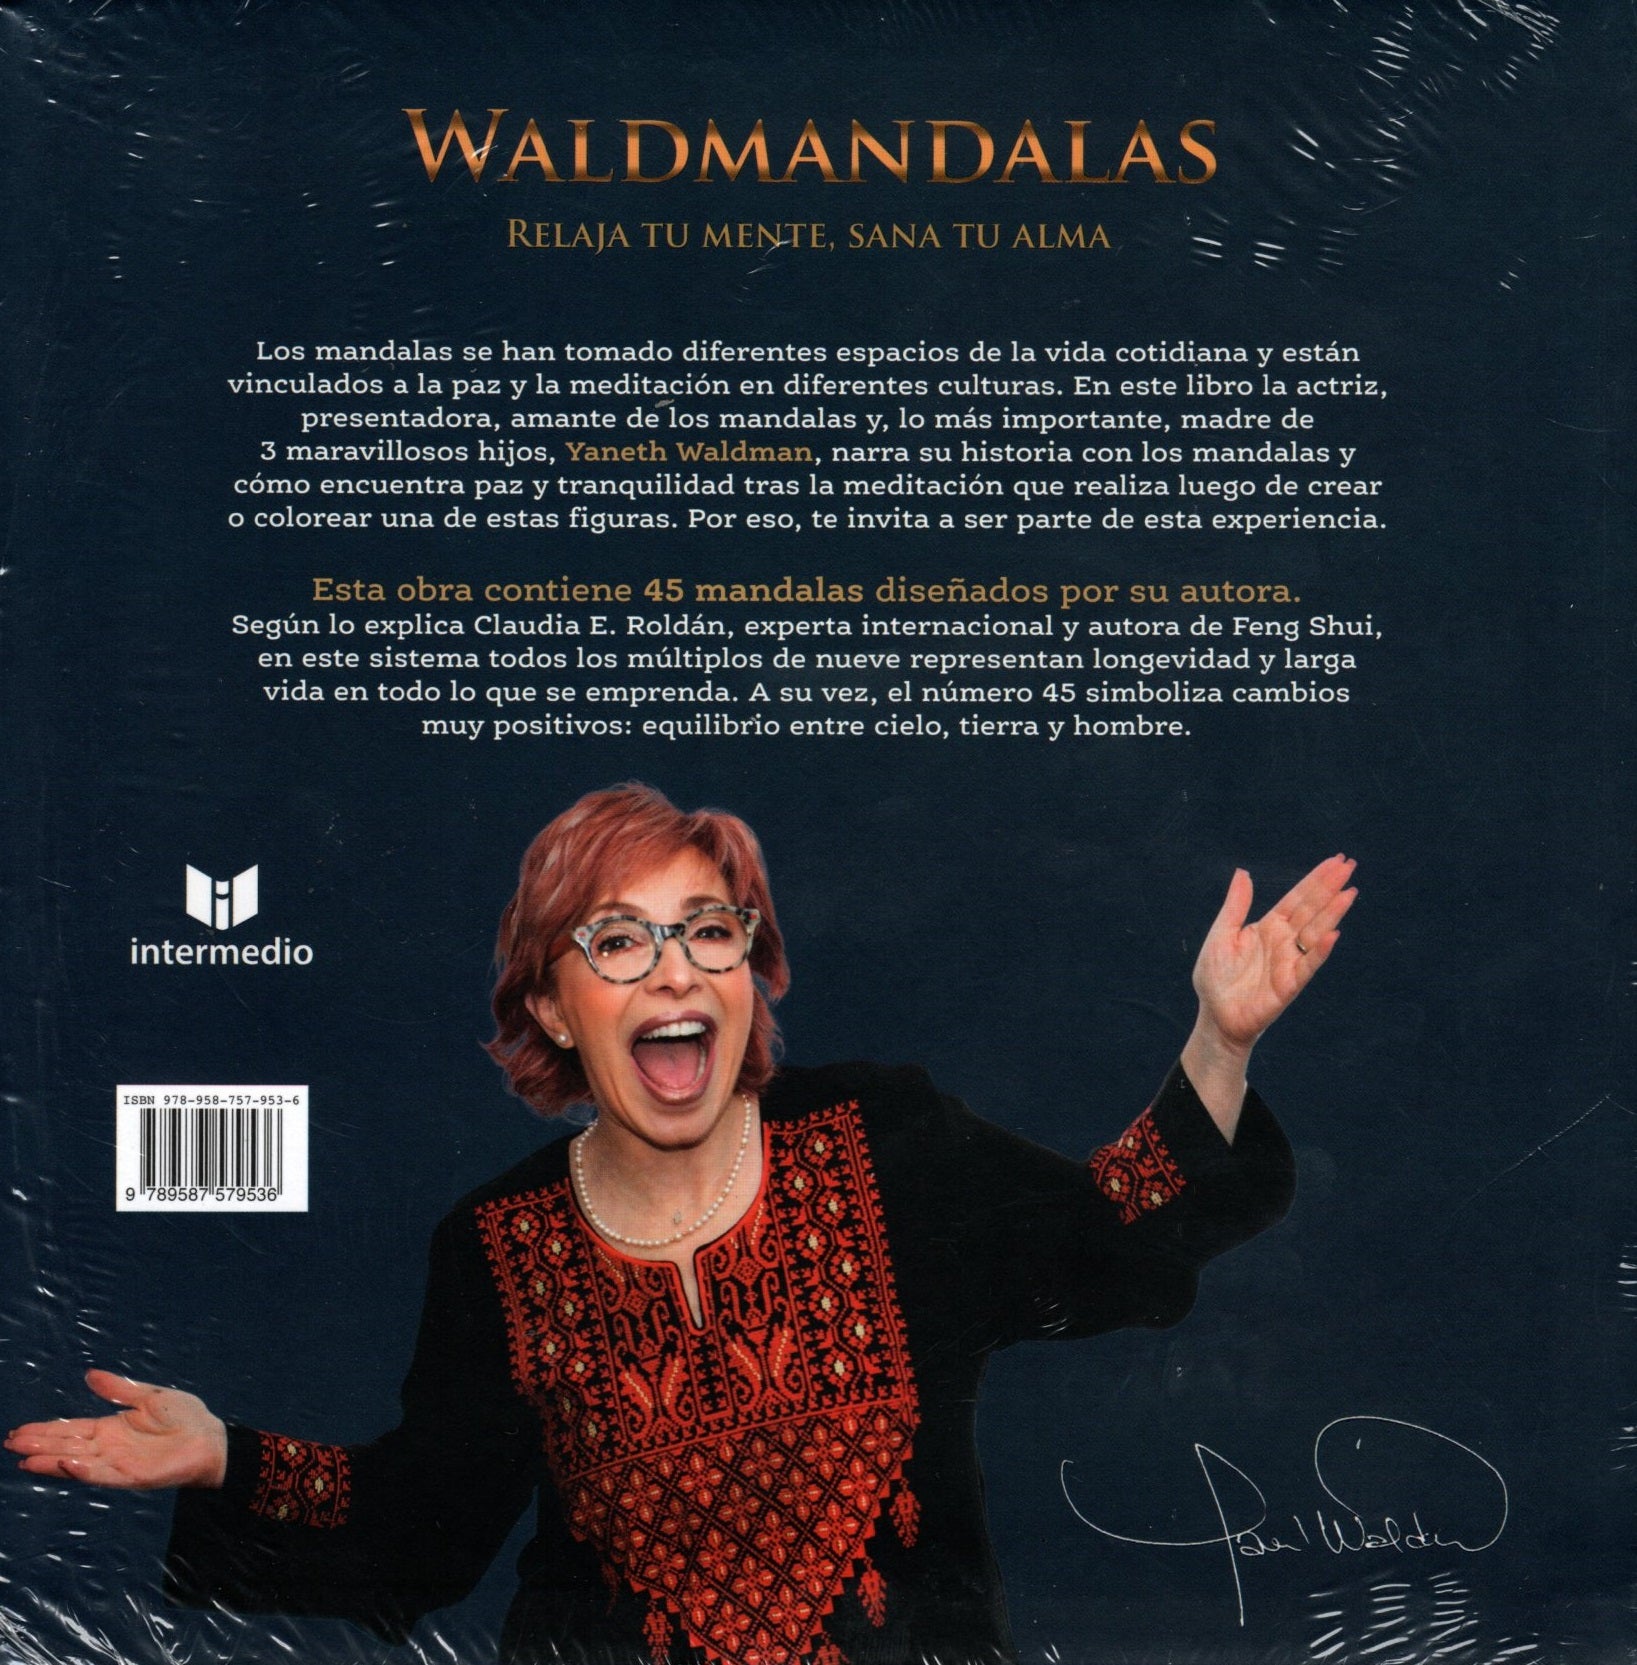 Libro Yaneth Waldman - Waldmandalas I - Relaja Tu Mente, Sana Tu Alma